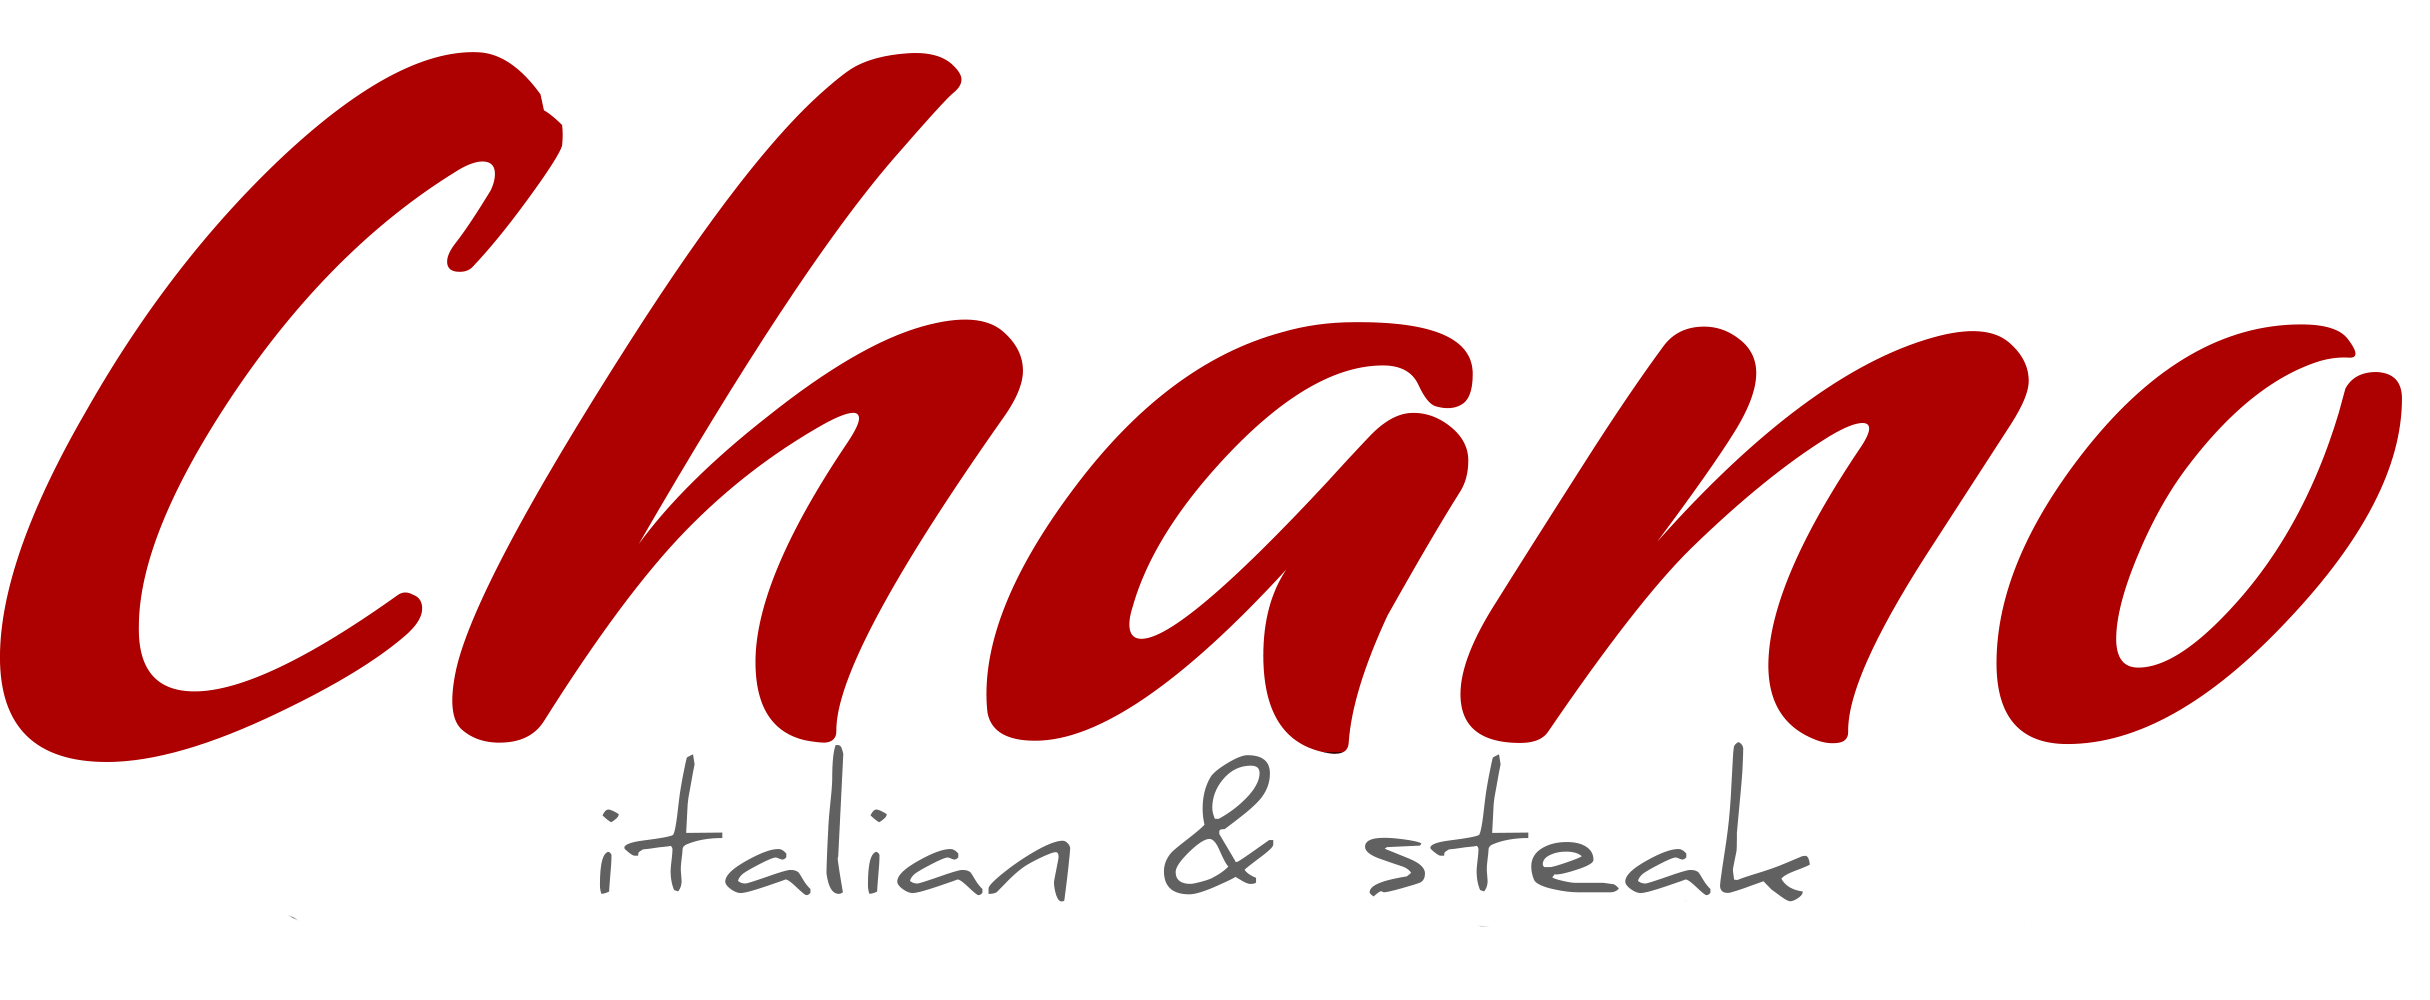 Chano Logo